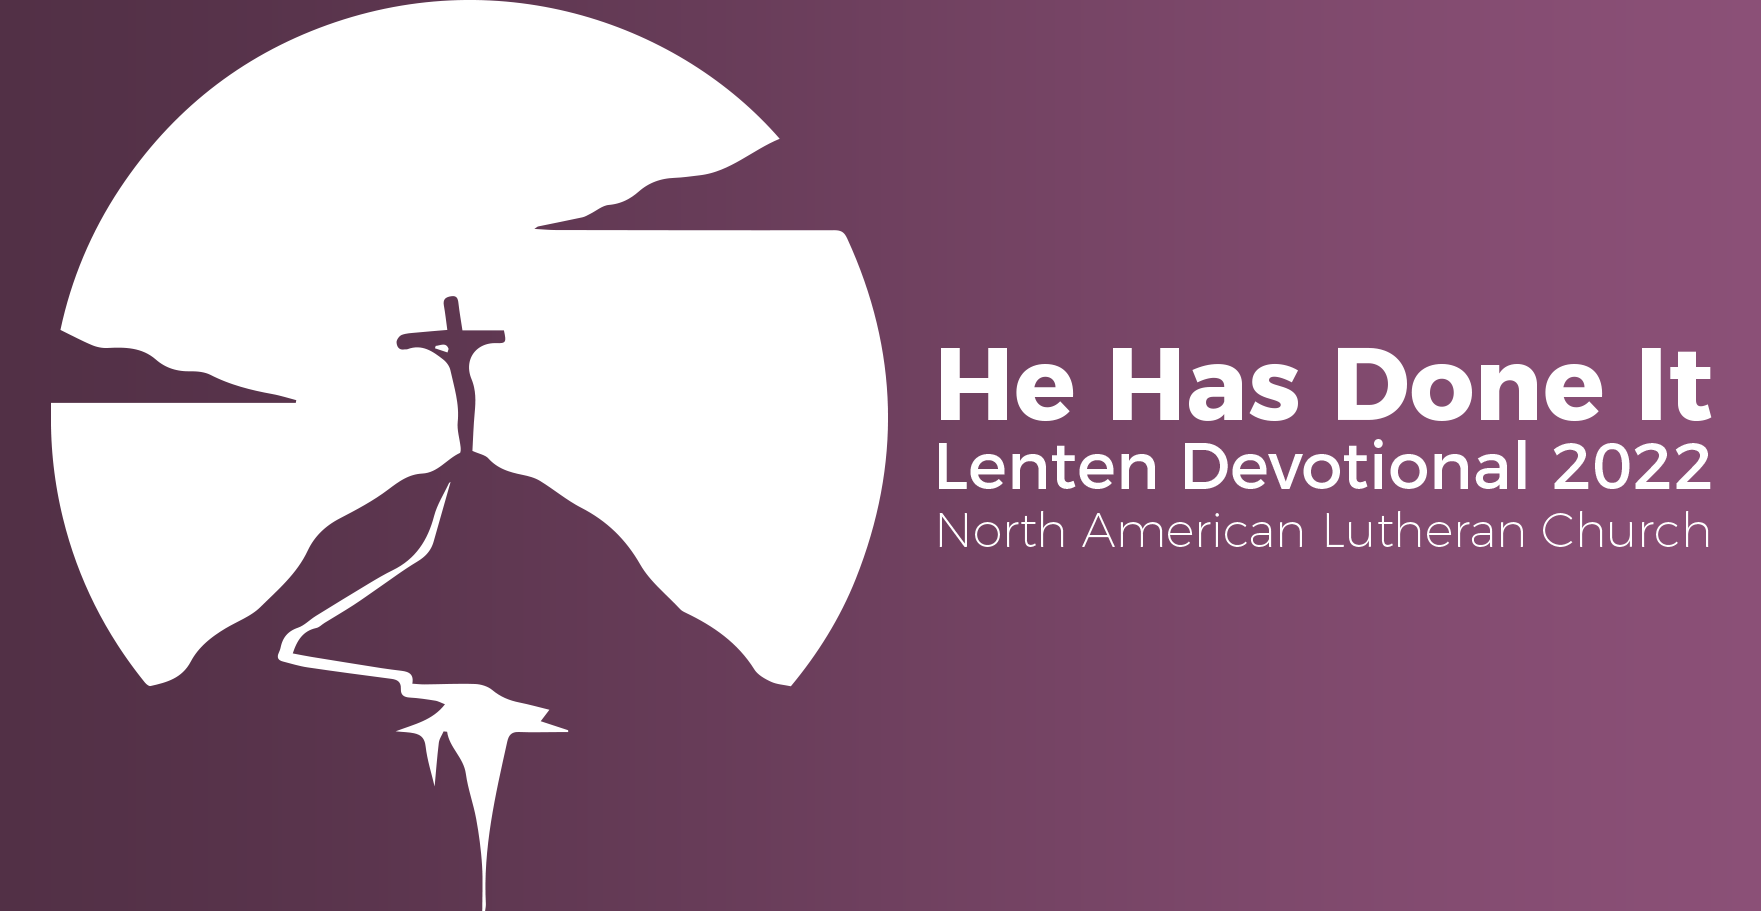 March 23, 2022 | Wednesday of the Week of Lent III